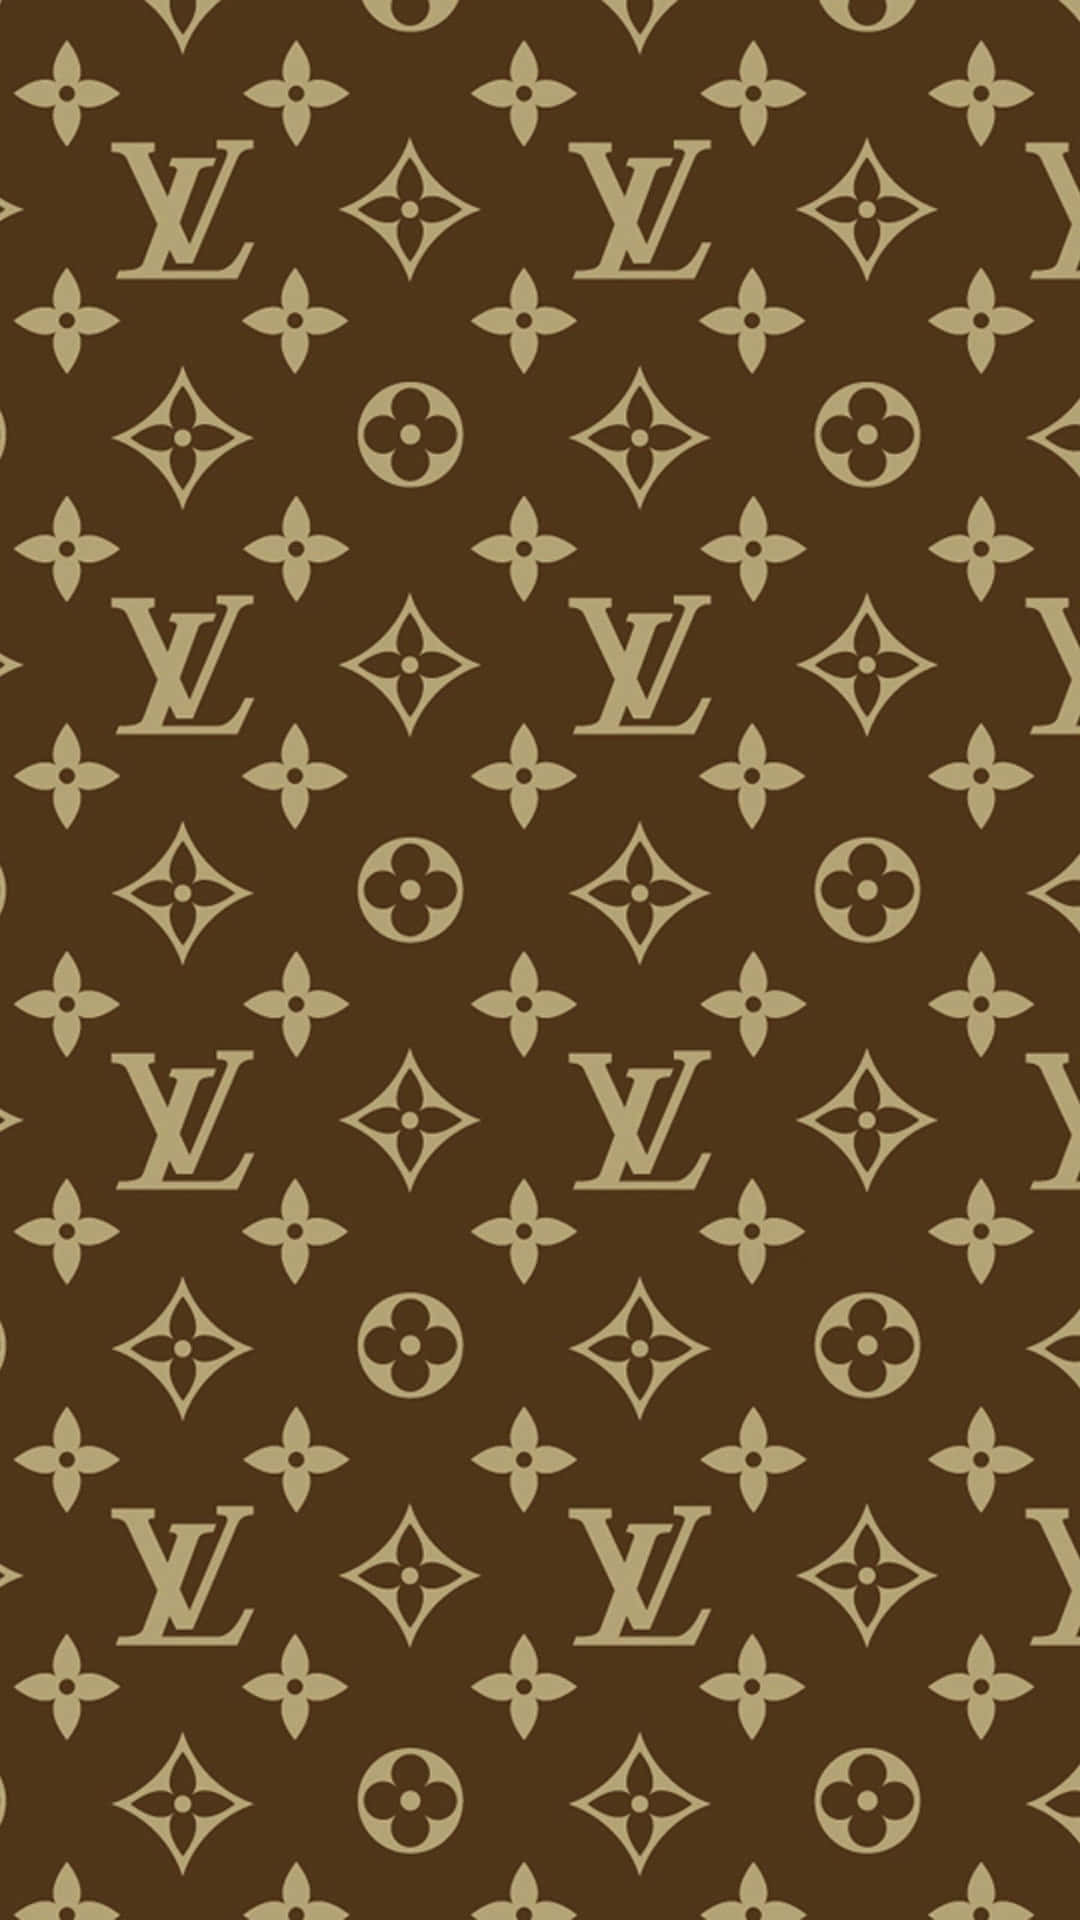 Download Louis Vuitton Monogram Pattern In Brown And Beige